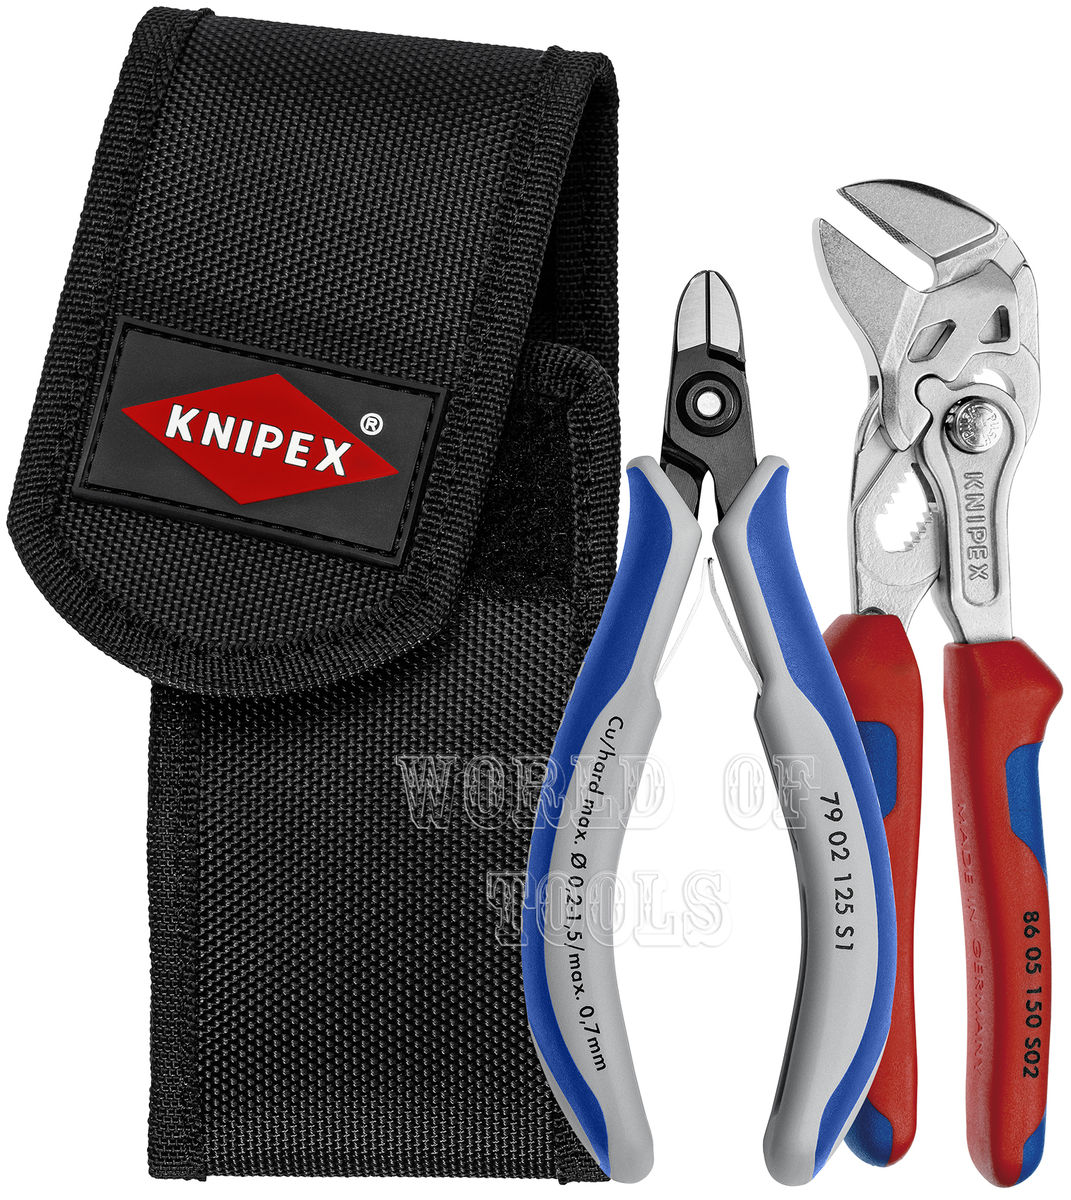 KNIPEX Набор инструментов для снятия стяжек: KN-8605150, KN-7902125, поясная сумка  KN-001972V01   